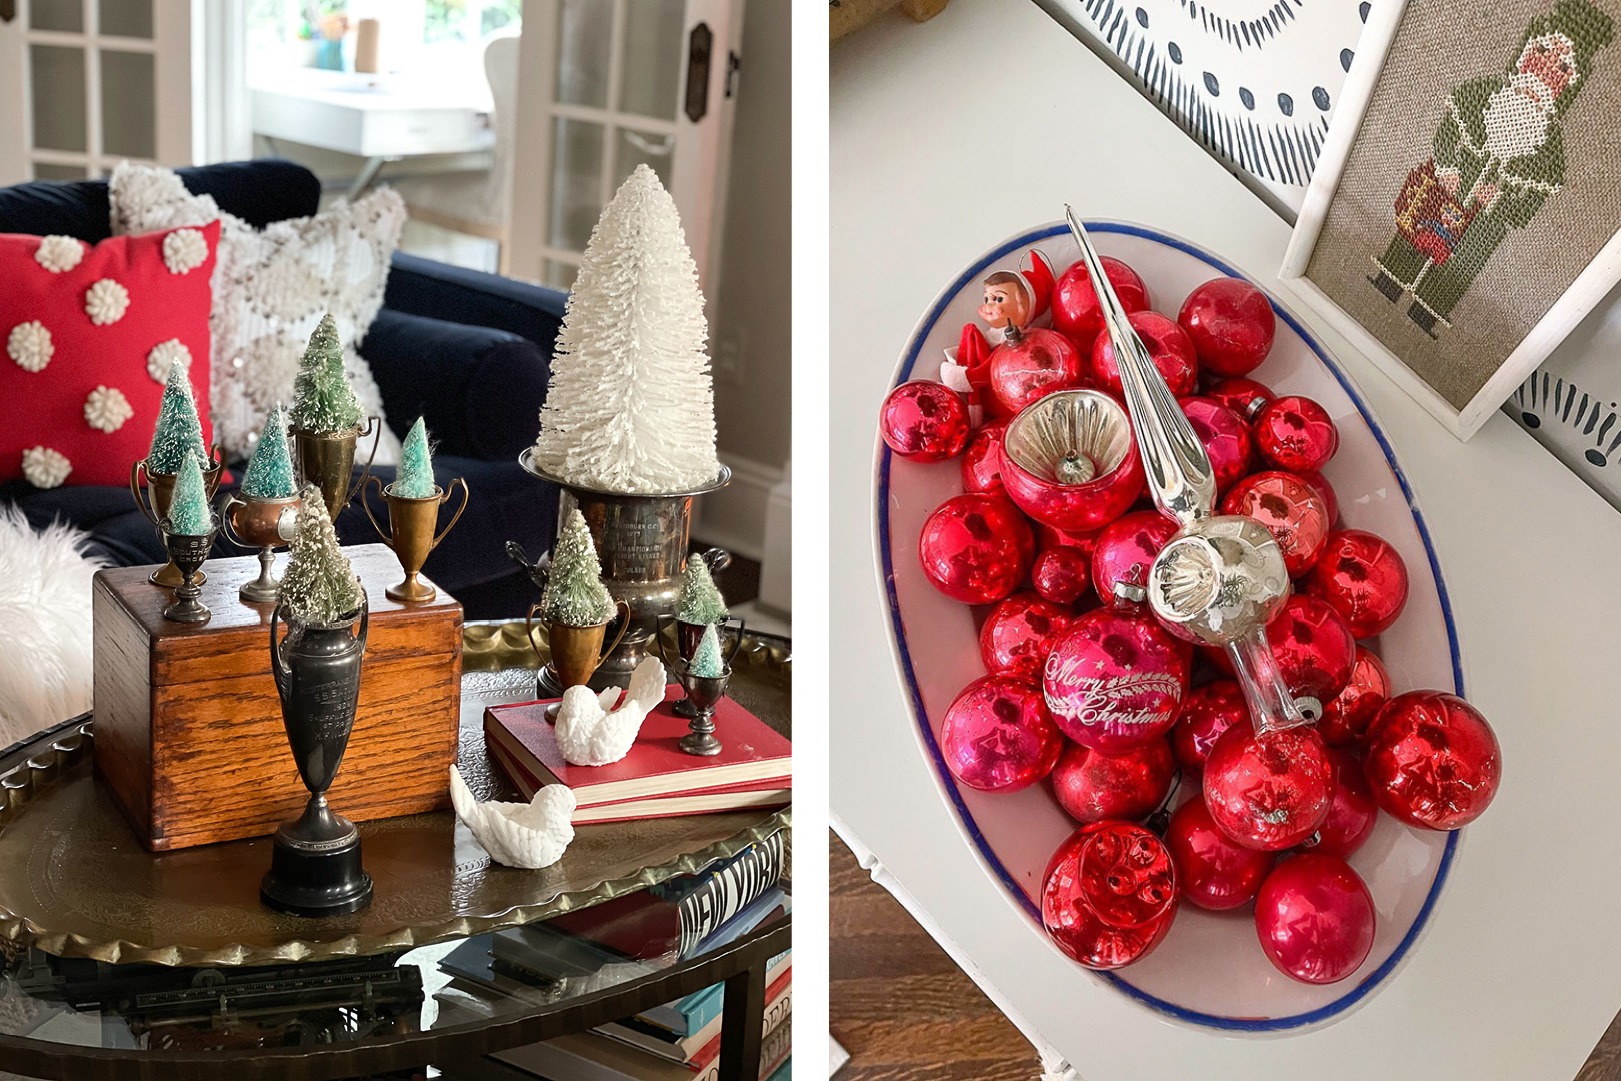 How I Store My Christmas Ornaments! - Kelly Elko